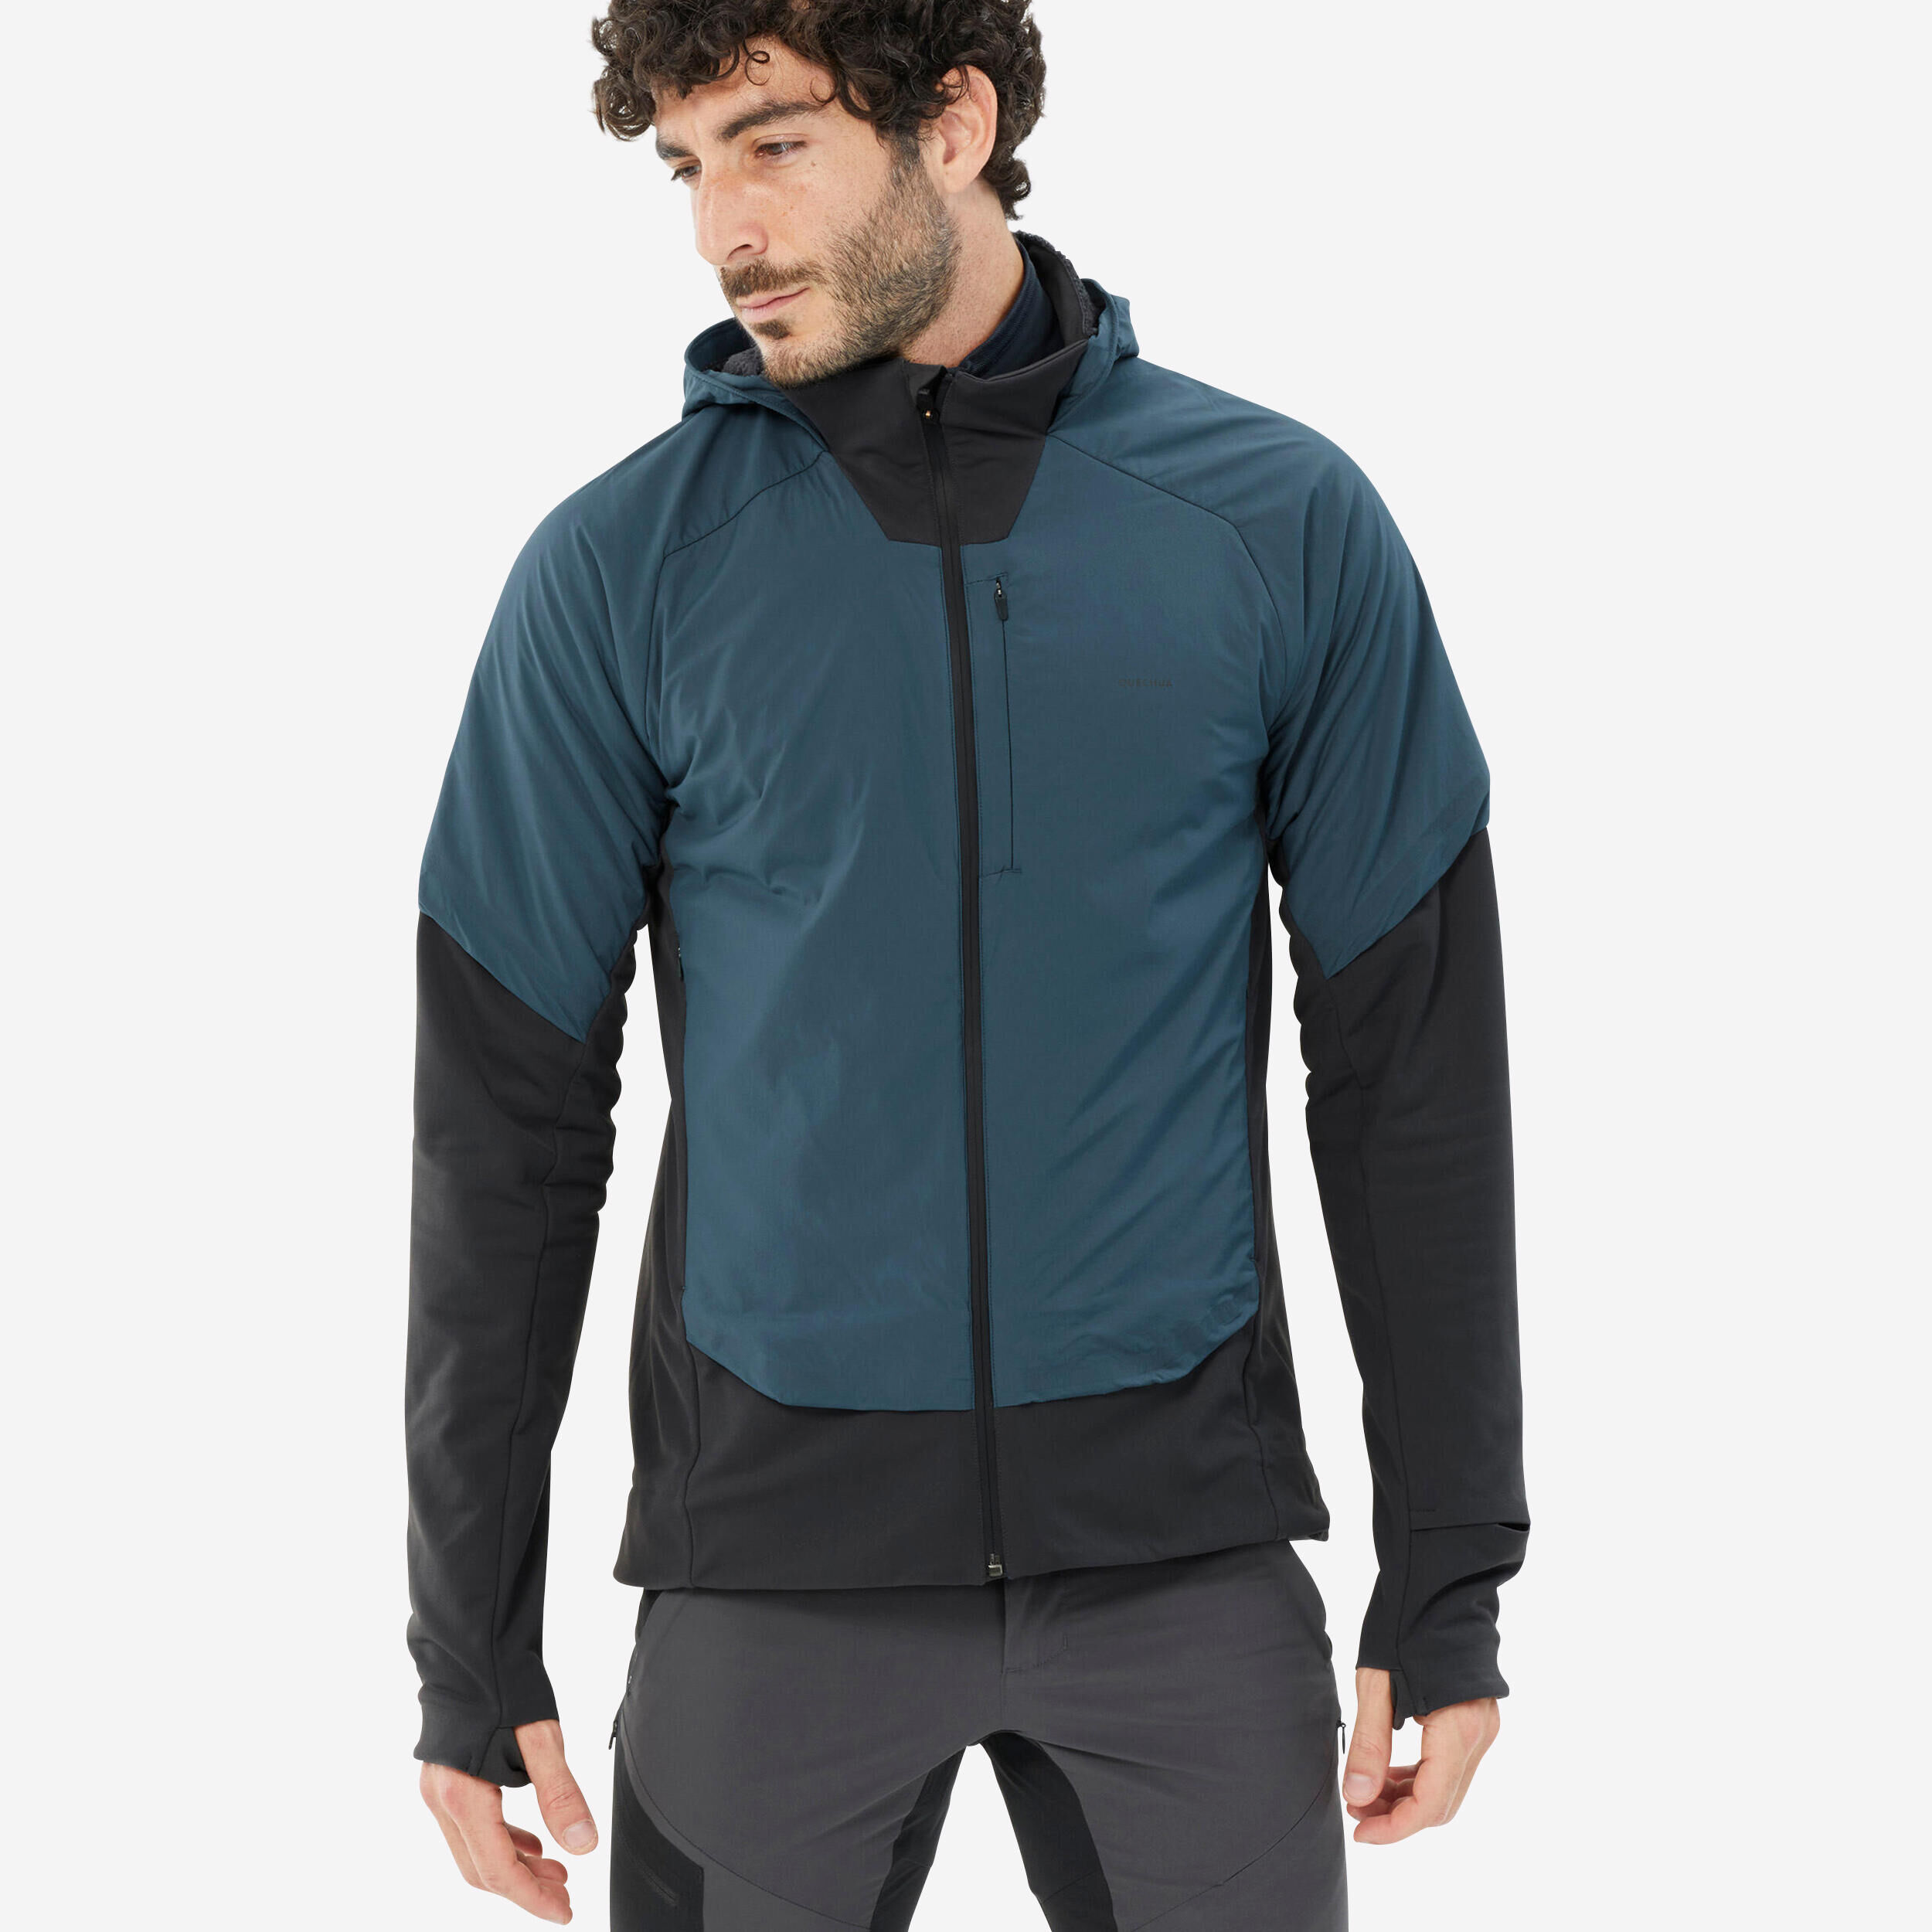 QUECHUA Men's Hiking Hybrid Fleece Jacket - MH920 Hood